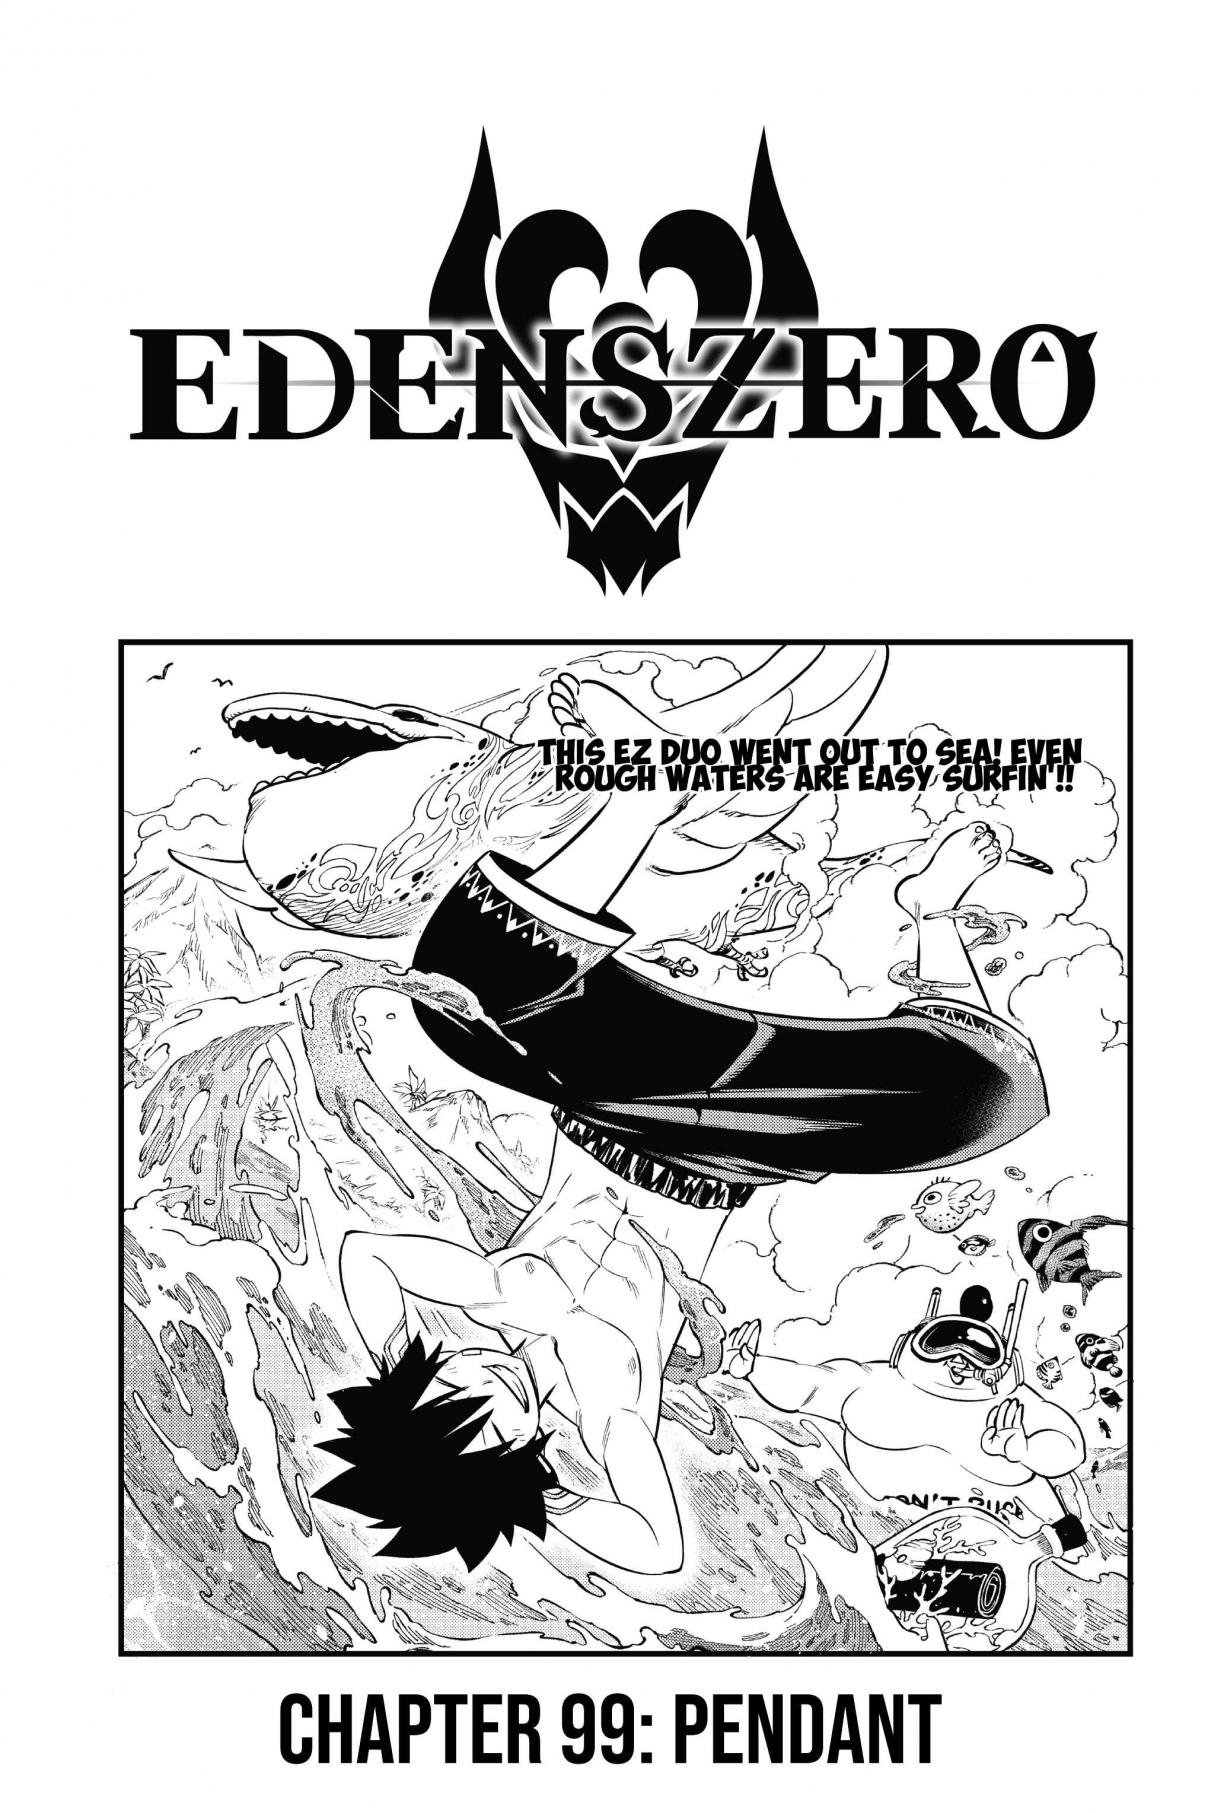 Edens Zero Ch. 99 Pendant